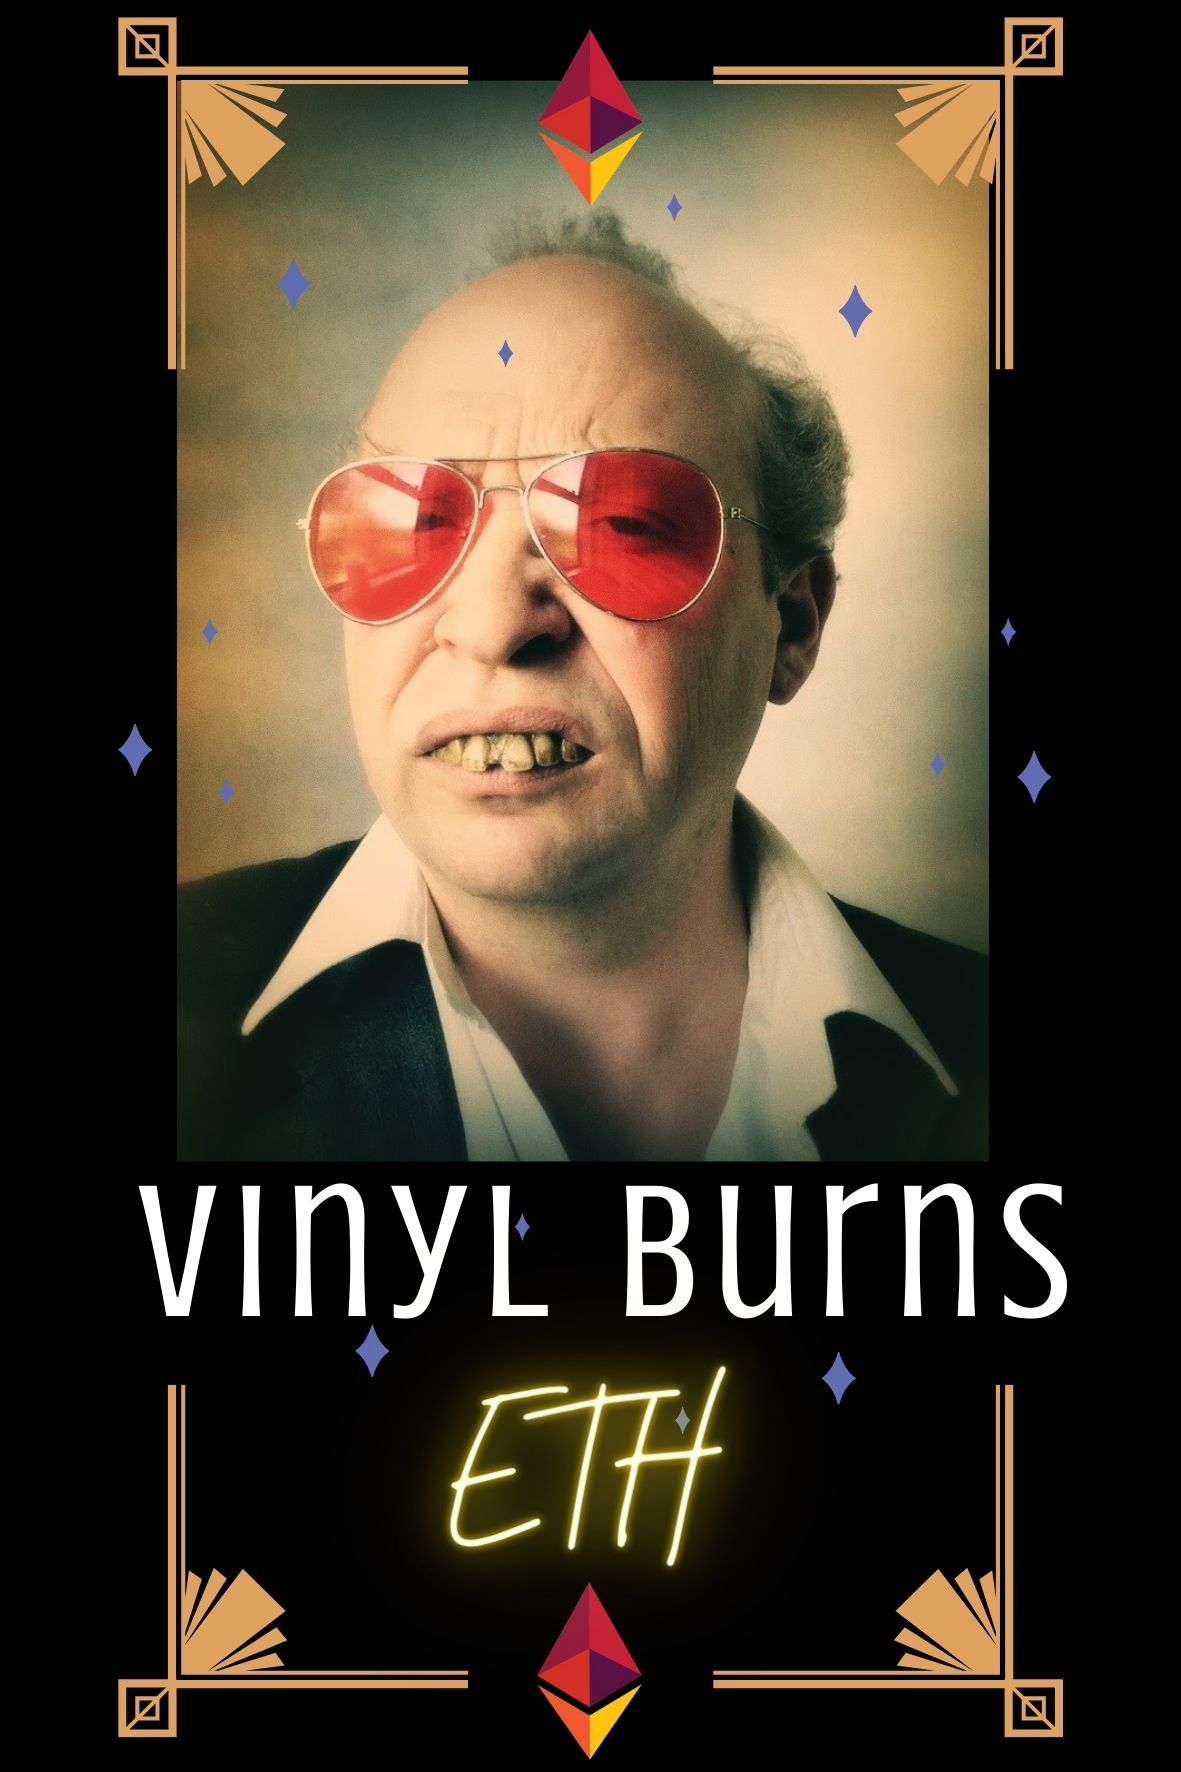 Vinyl Burns - ETH